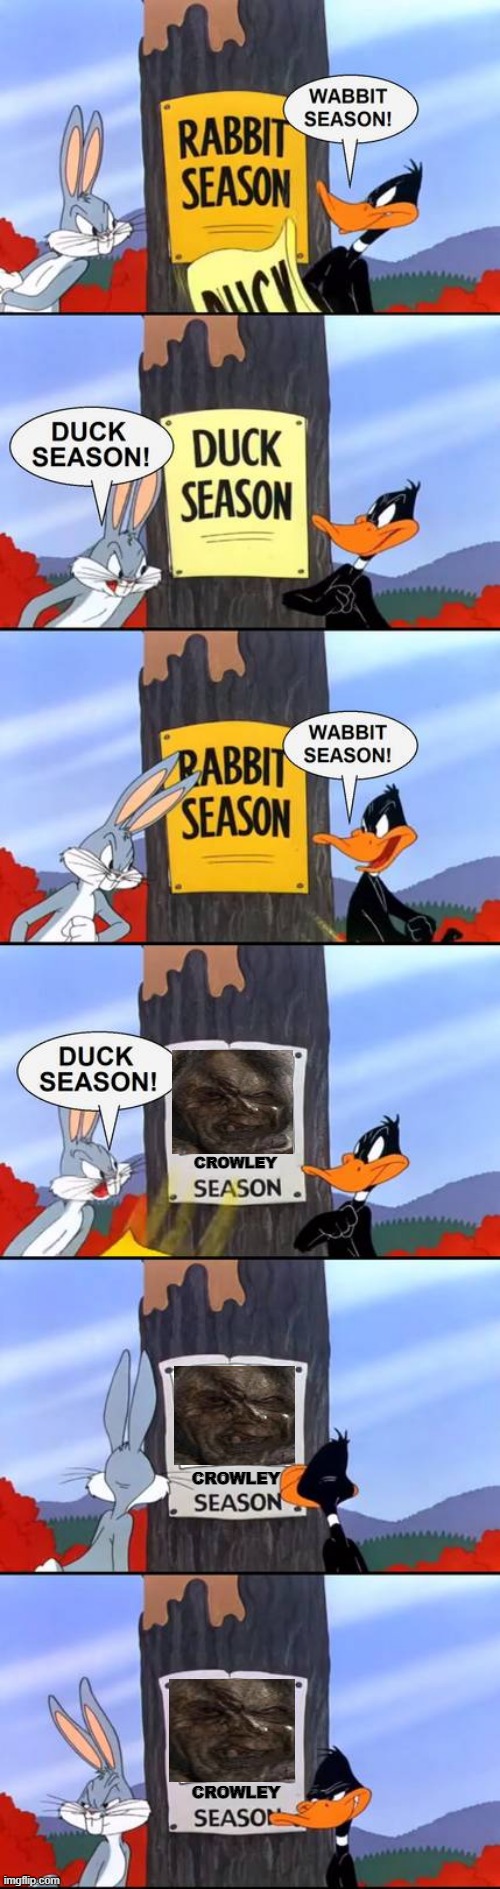 crowley season | CROWLEY; CROWLEY; CROWLEY | image tagged in wabbit season duck season elmer season,horror movie | made w/ Imgflip meme maker